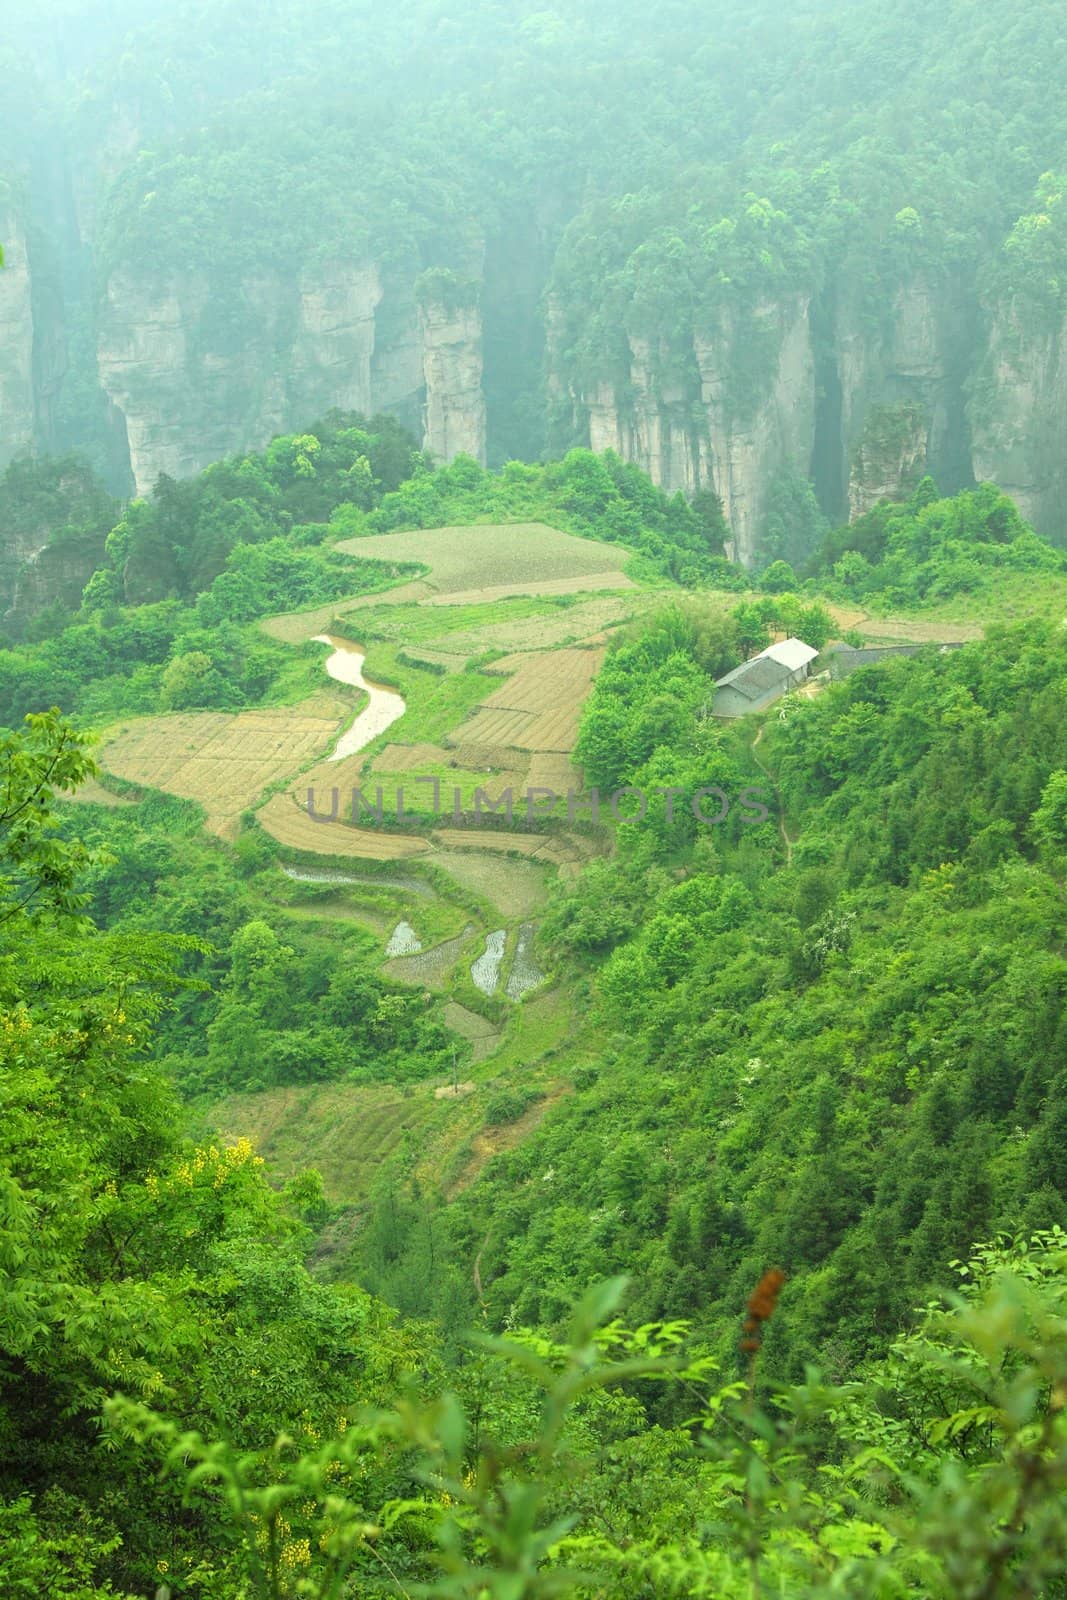 The garden at sky landscape of Zhangjiajie